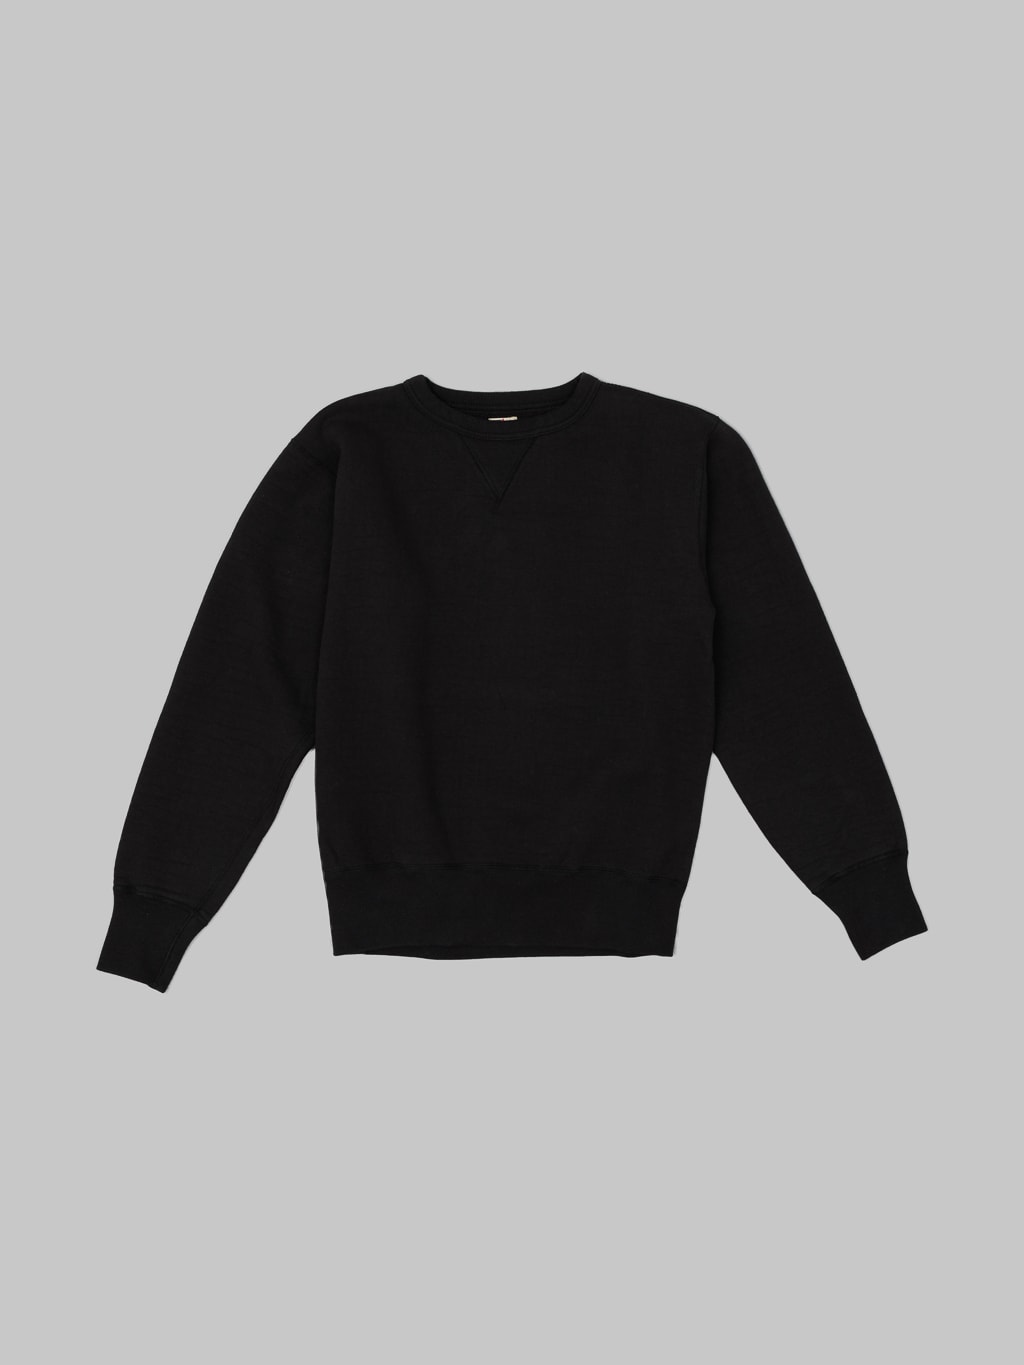 the strike gold loopwheeled sweatshirt black 100 cotton